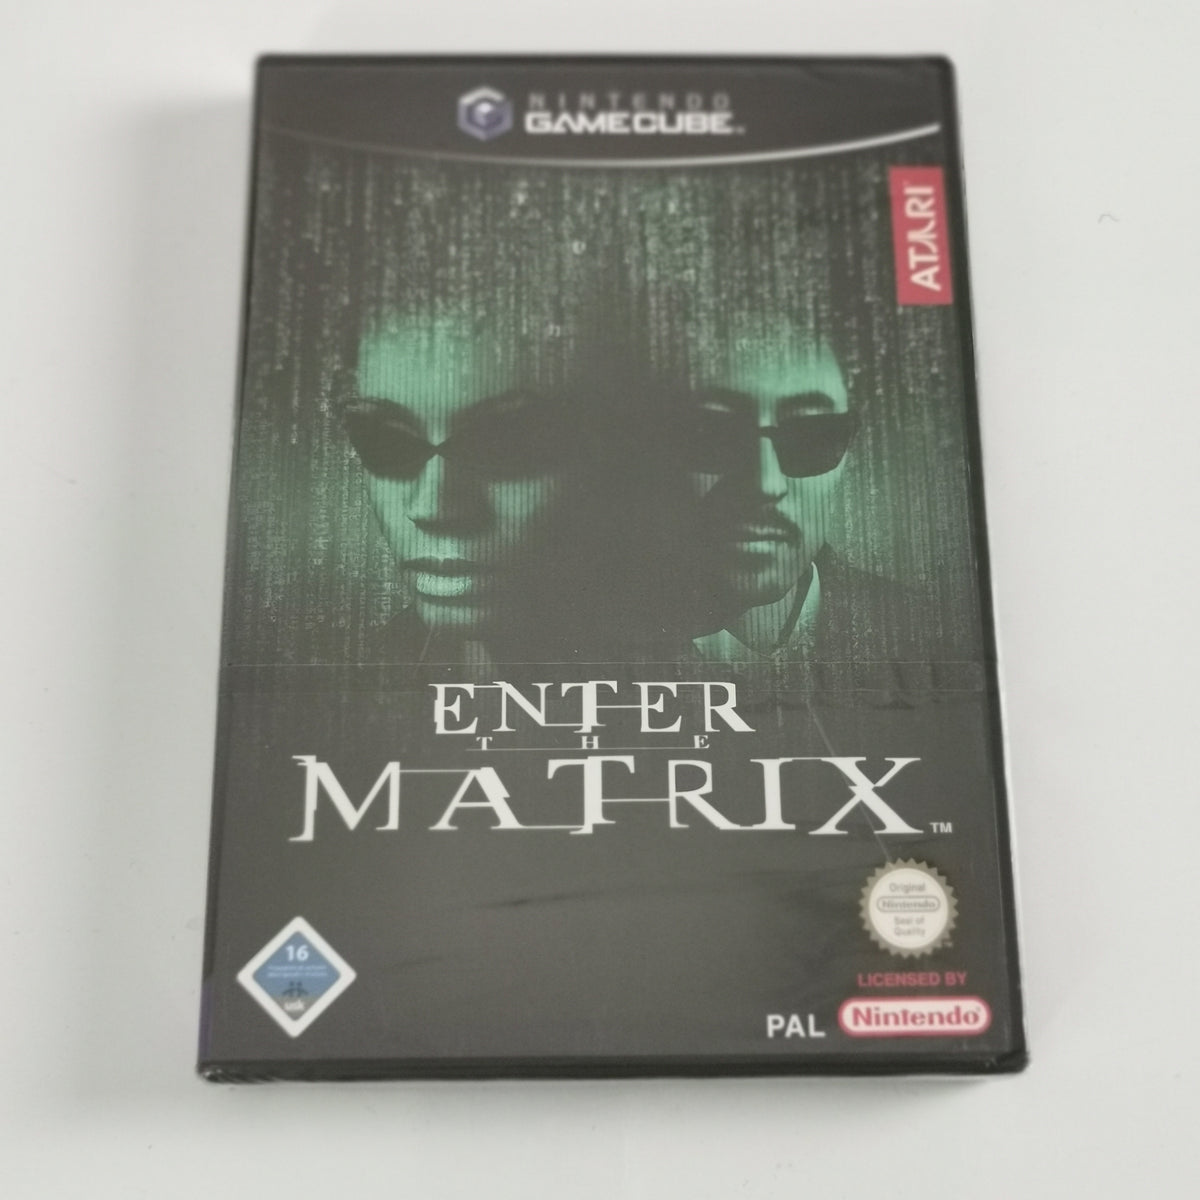 Enter the Matrix [GC] Gamecube